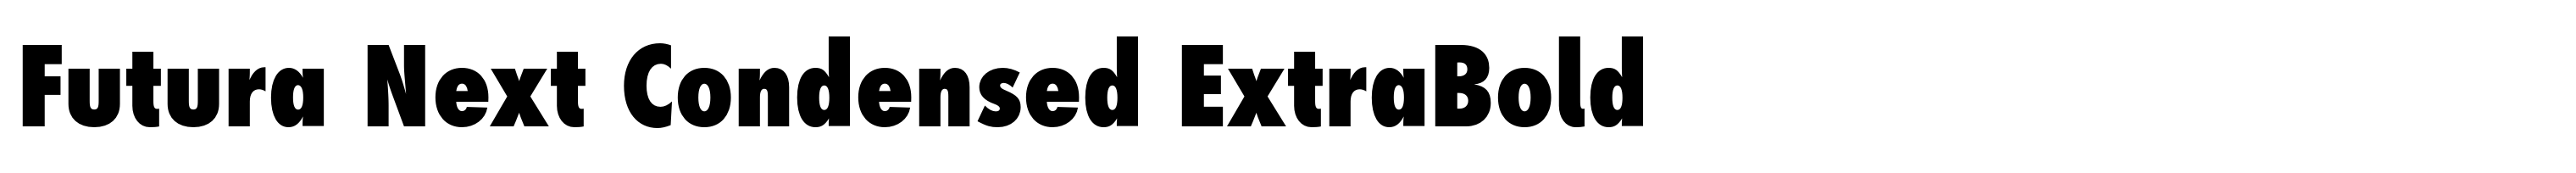 Futura Next Condensed ExtraBold